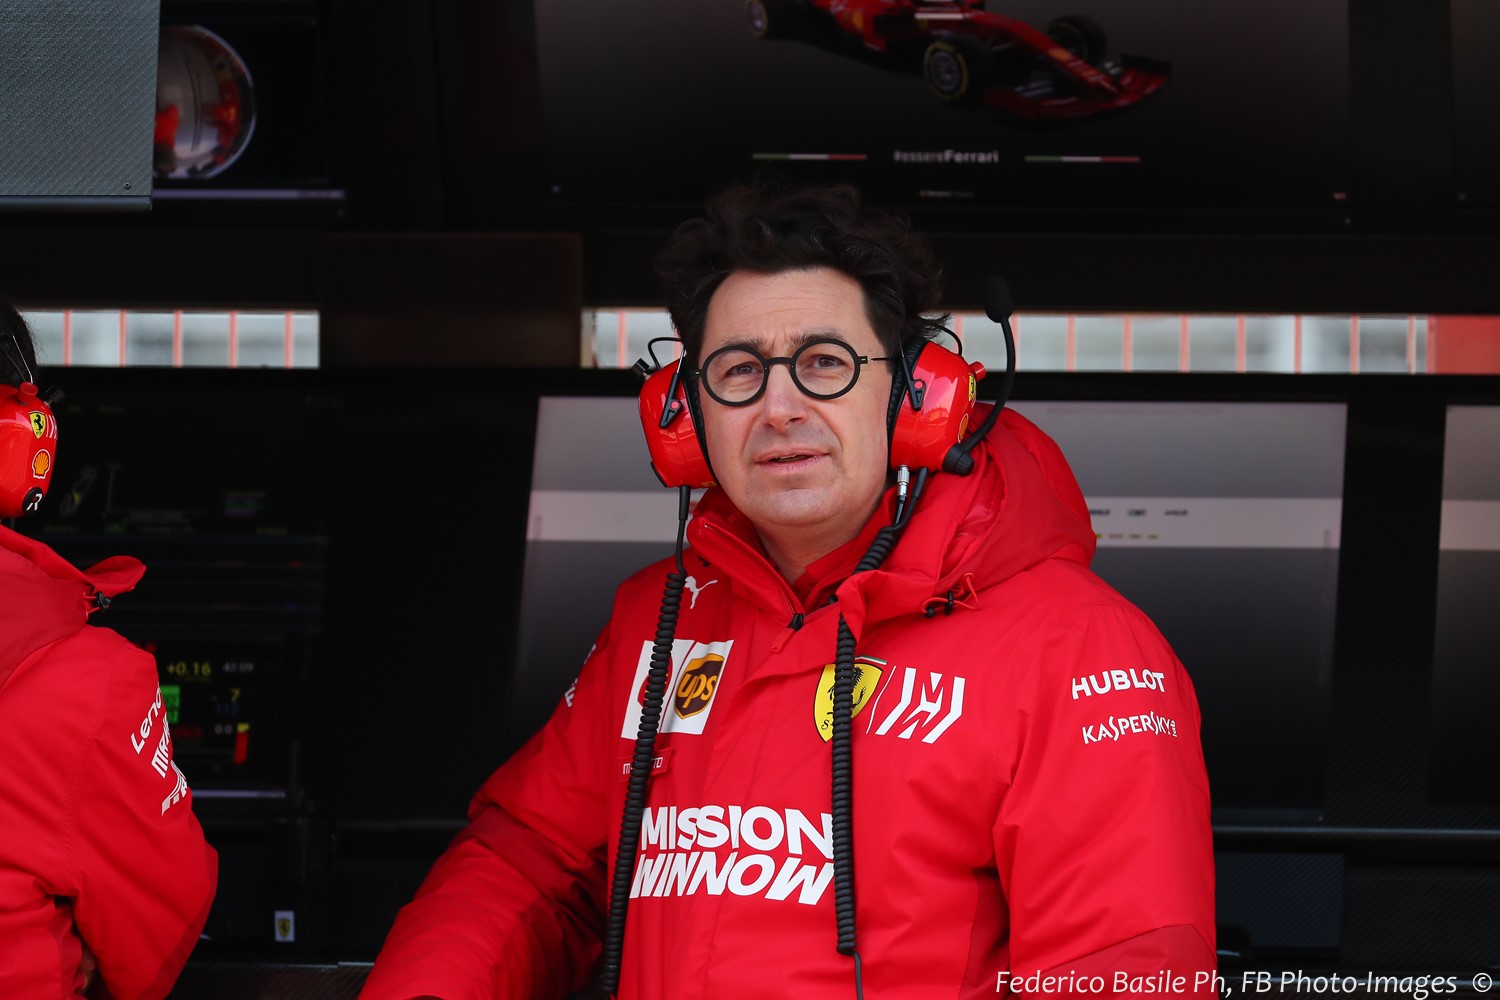 No Ferrari for Max Verstappen says Binotto